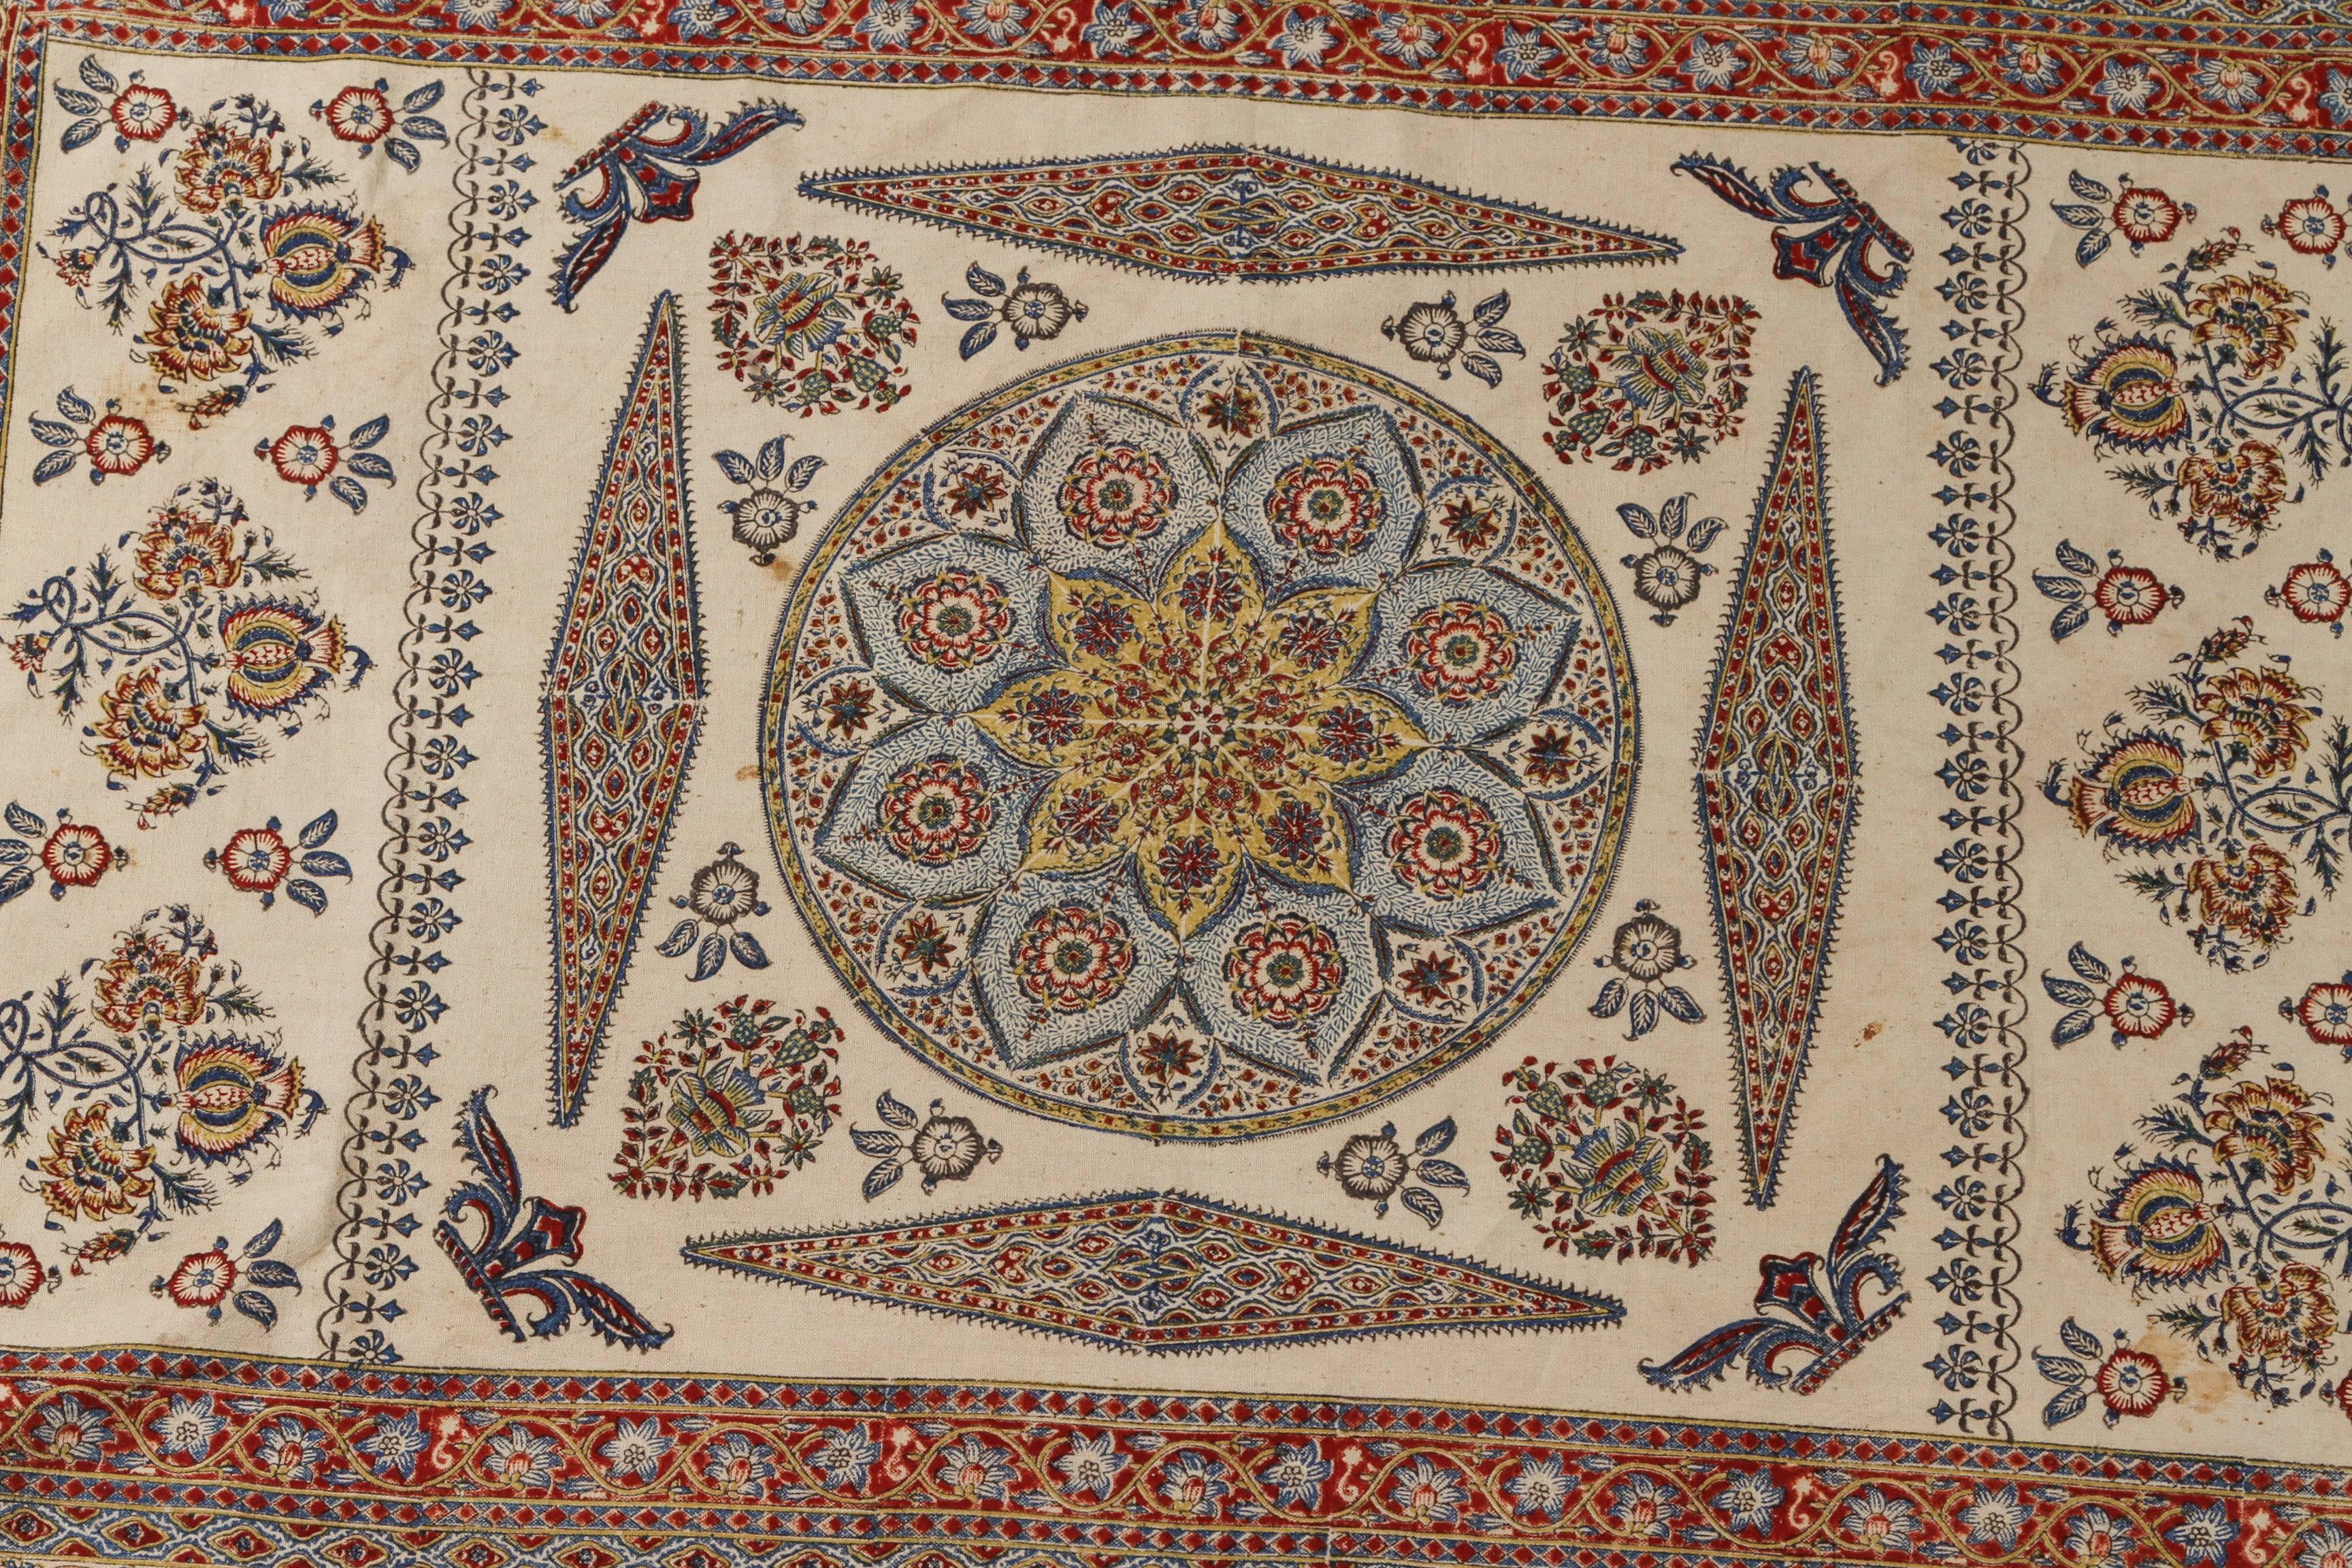 Islamic Persian Paisley Woodblock Printed Textile